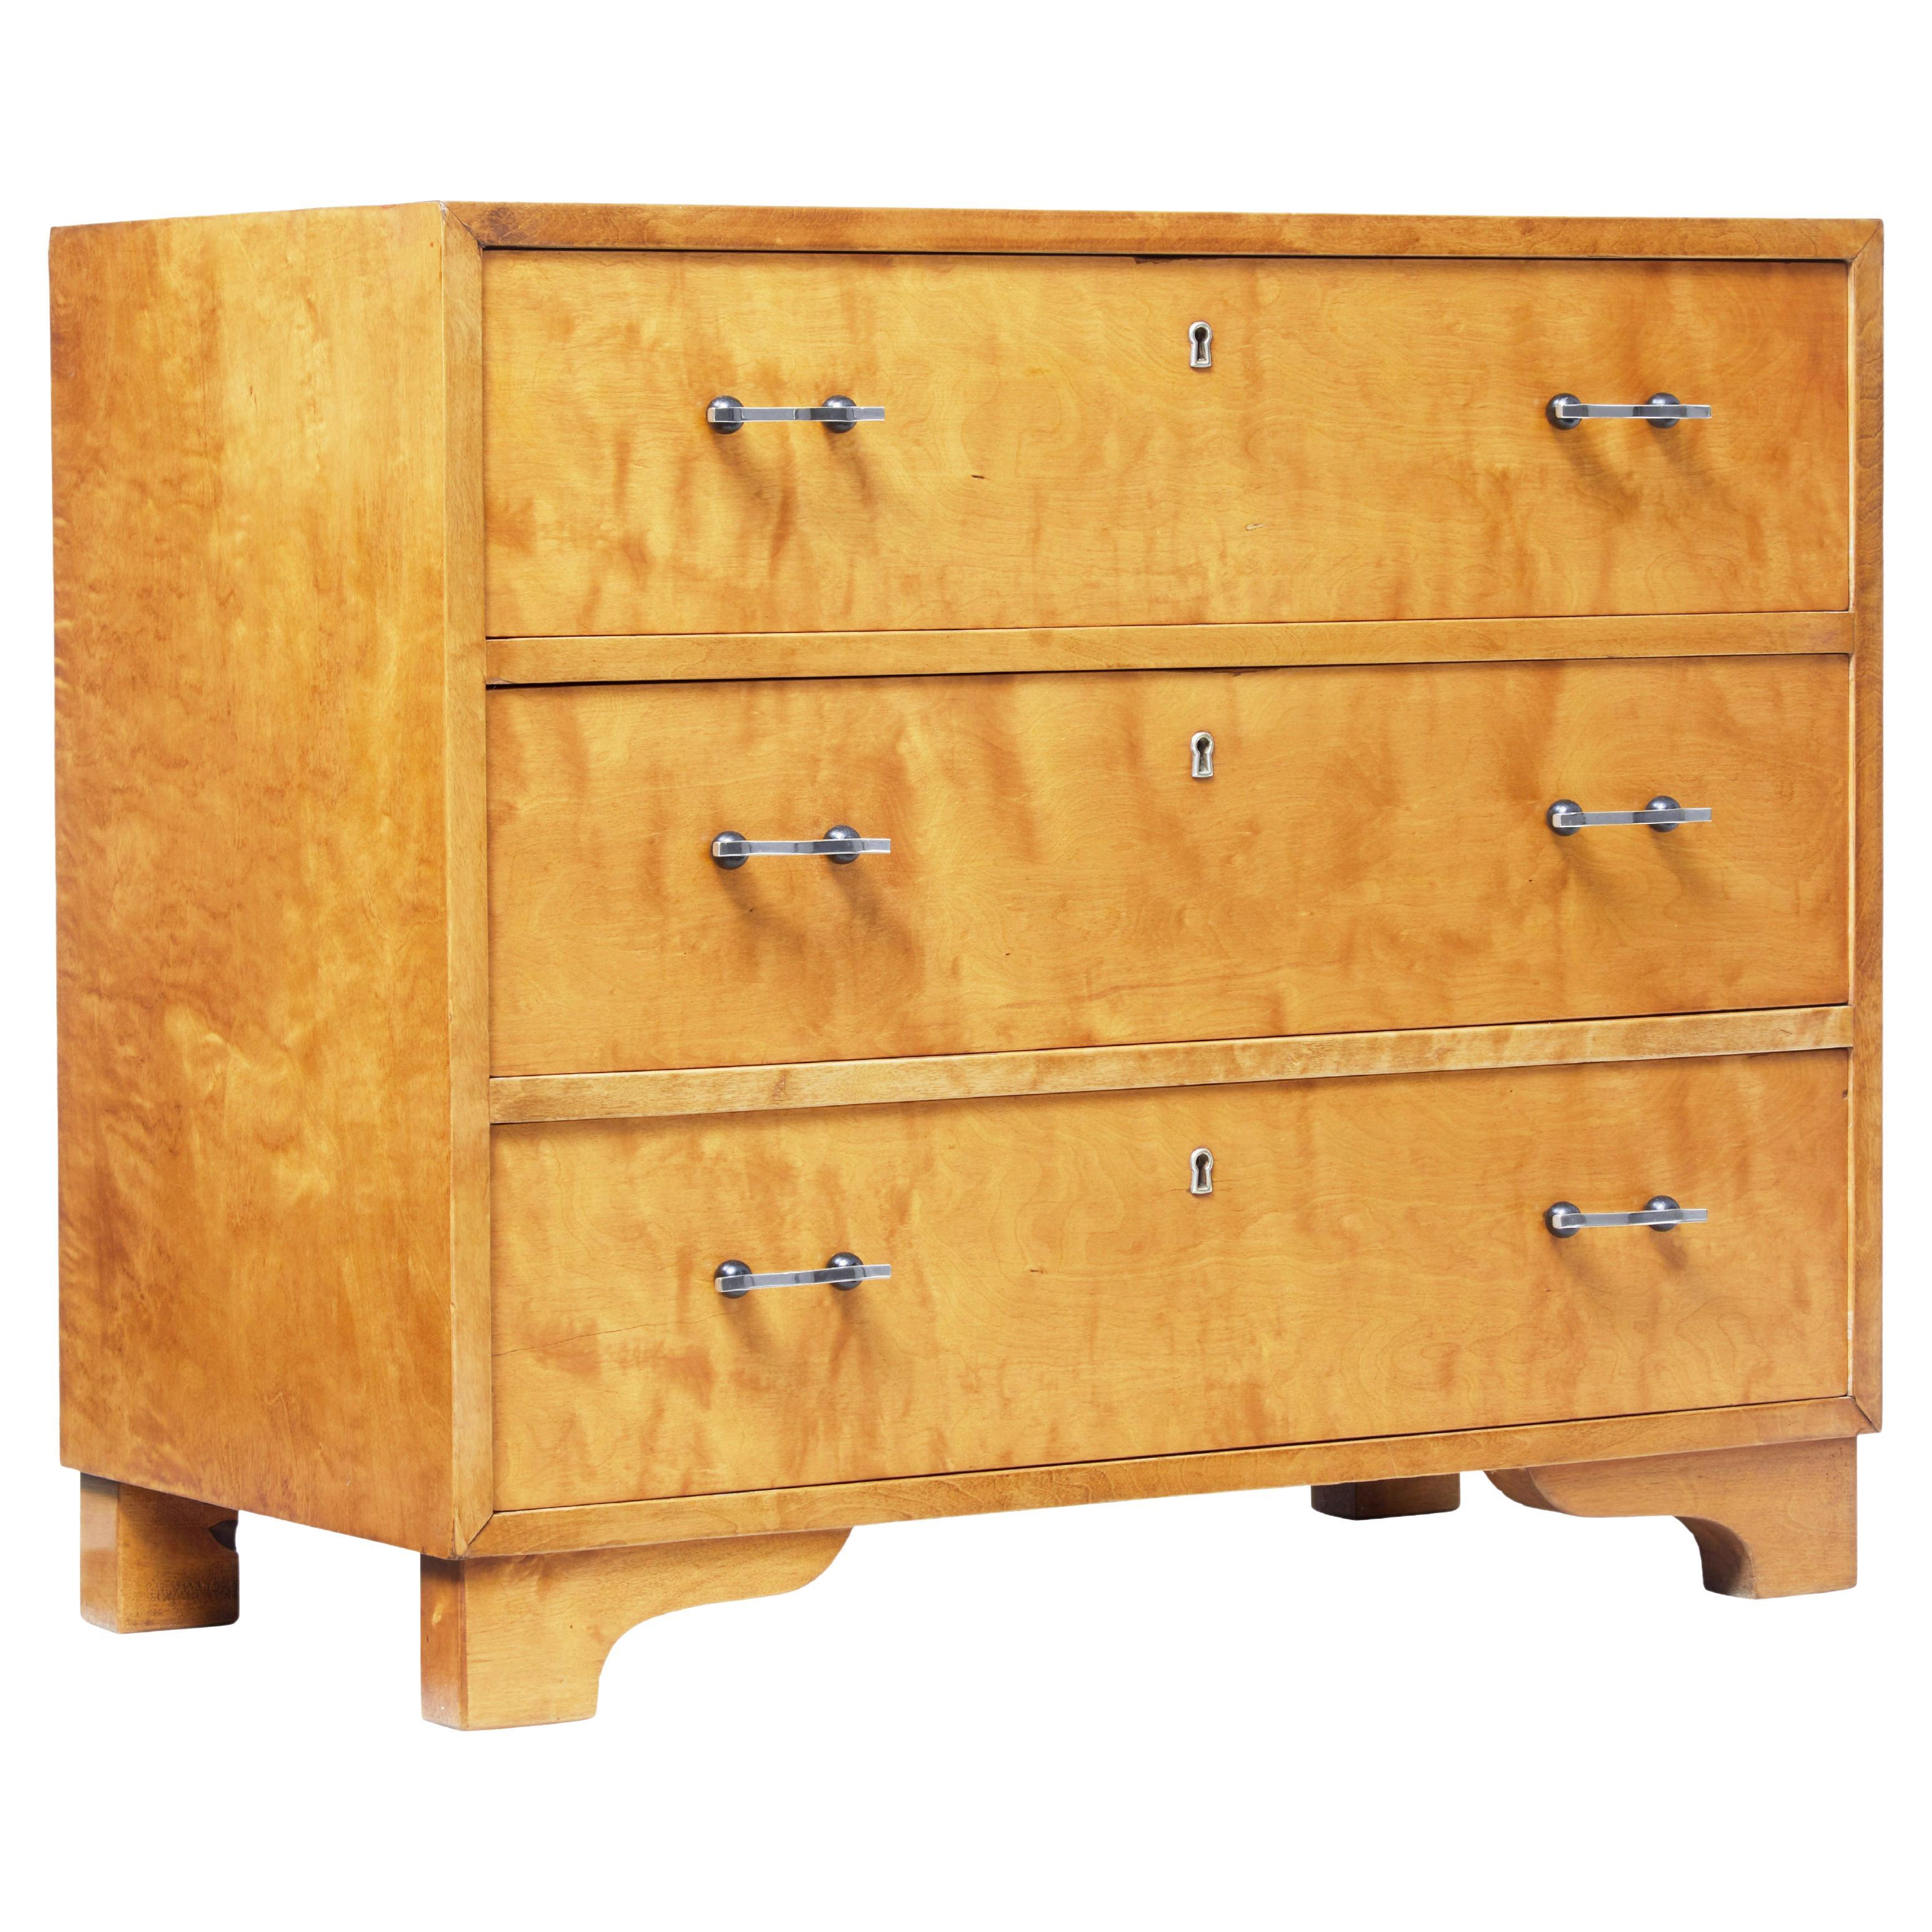 Mid 20th century Swedish birch chest of drawers